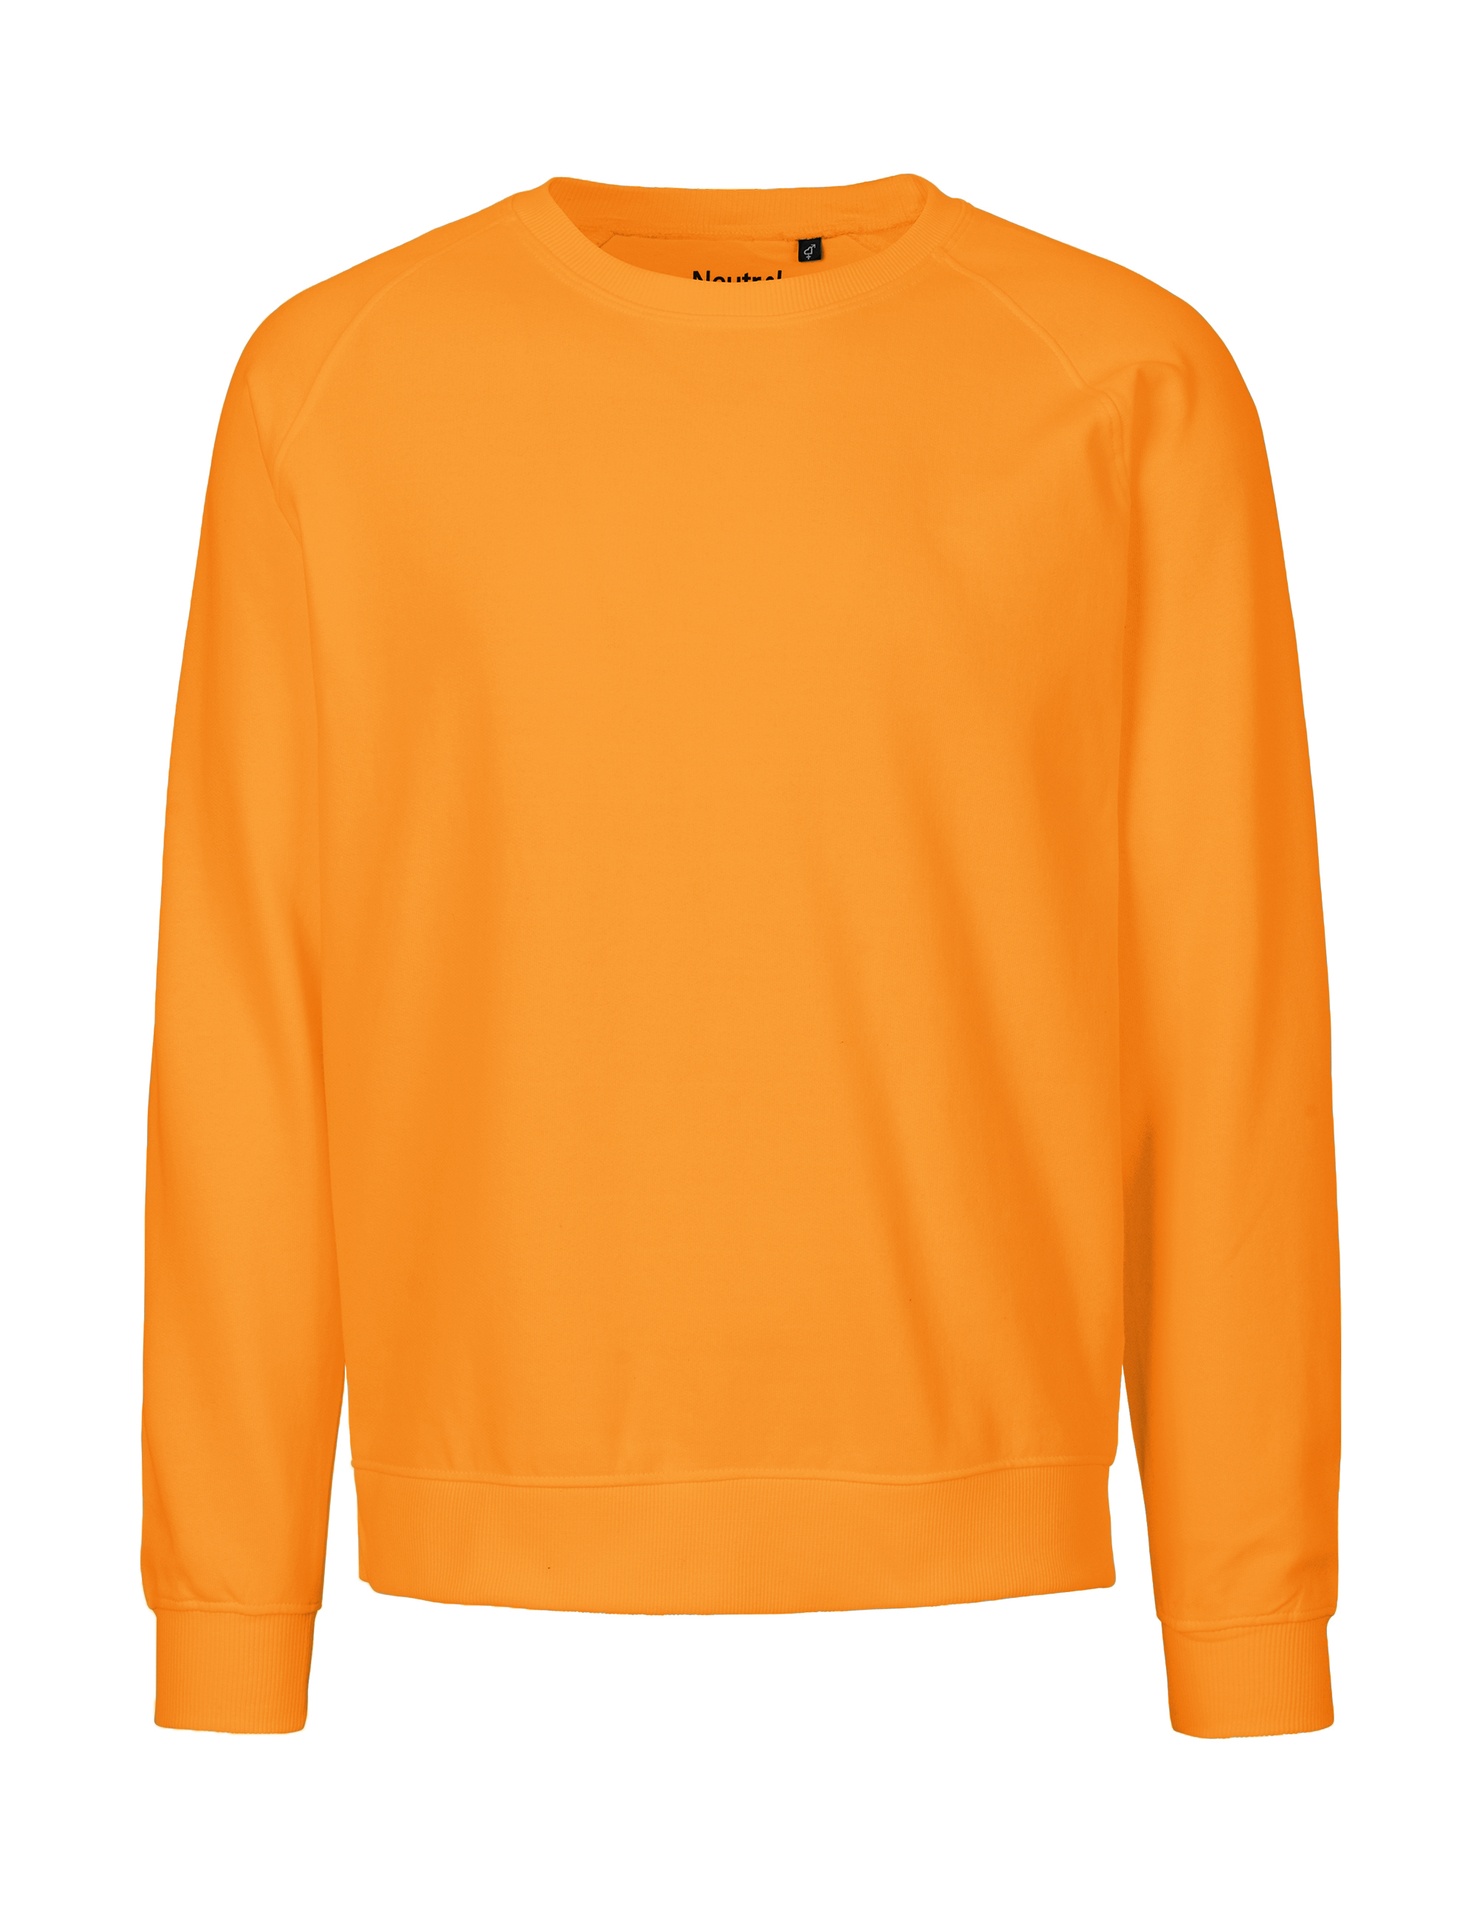 [PR/02792] Unisex Sweatshirt (Okay Orange 31, 2XL)